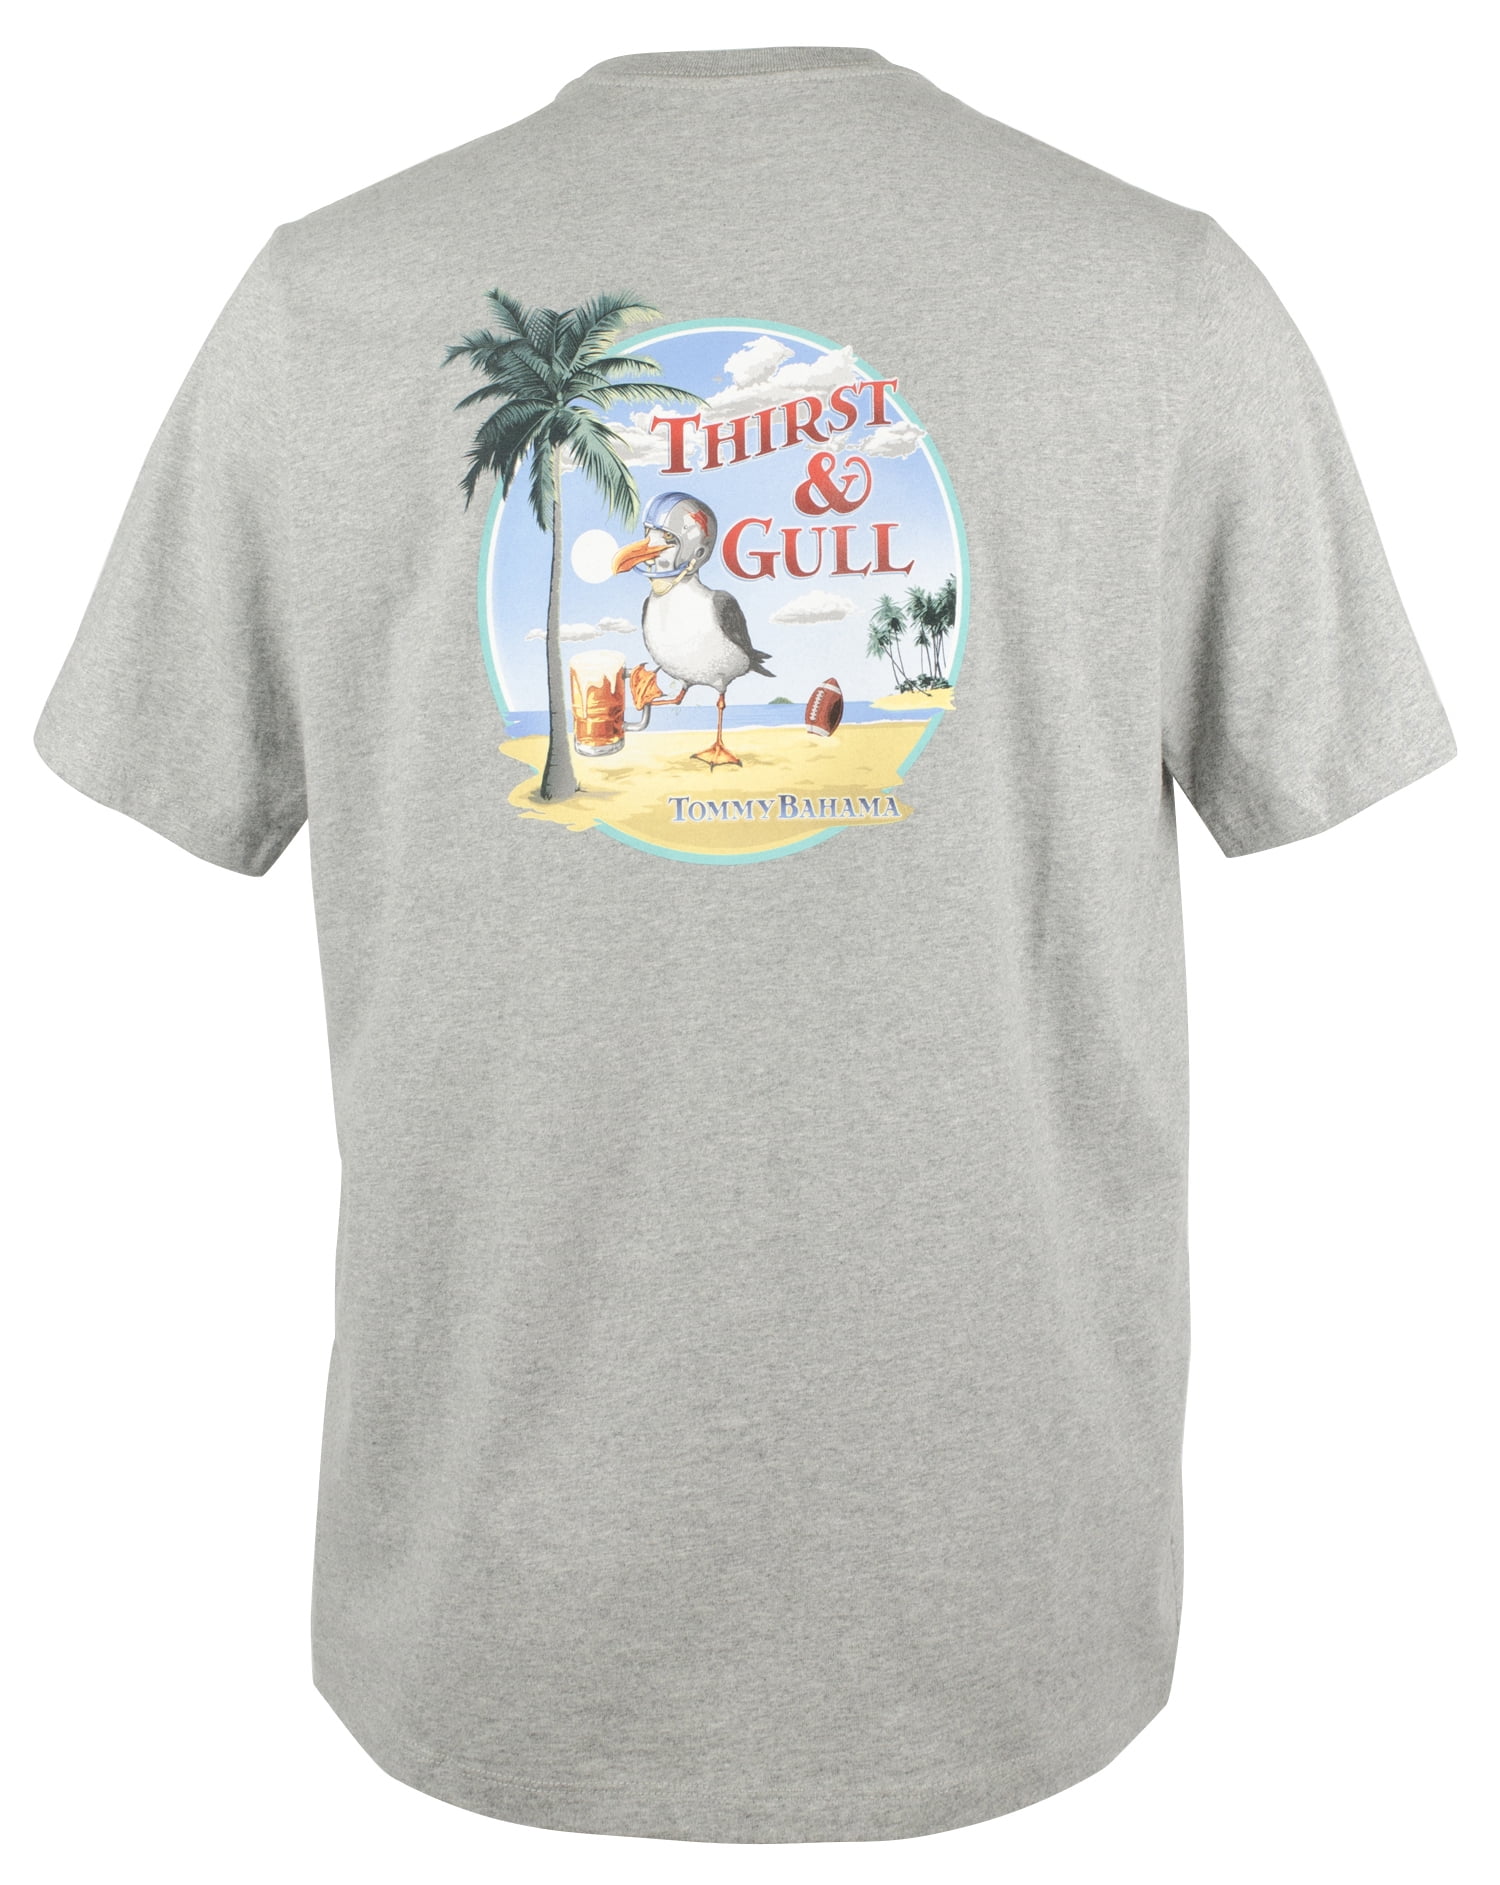 tommy bahama palm tree shirt